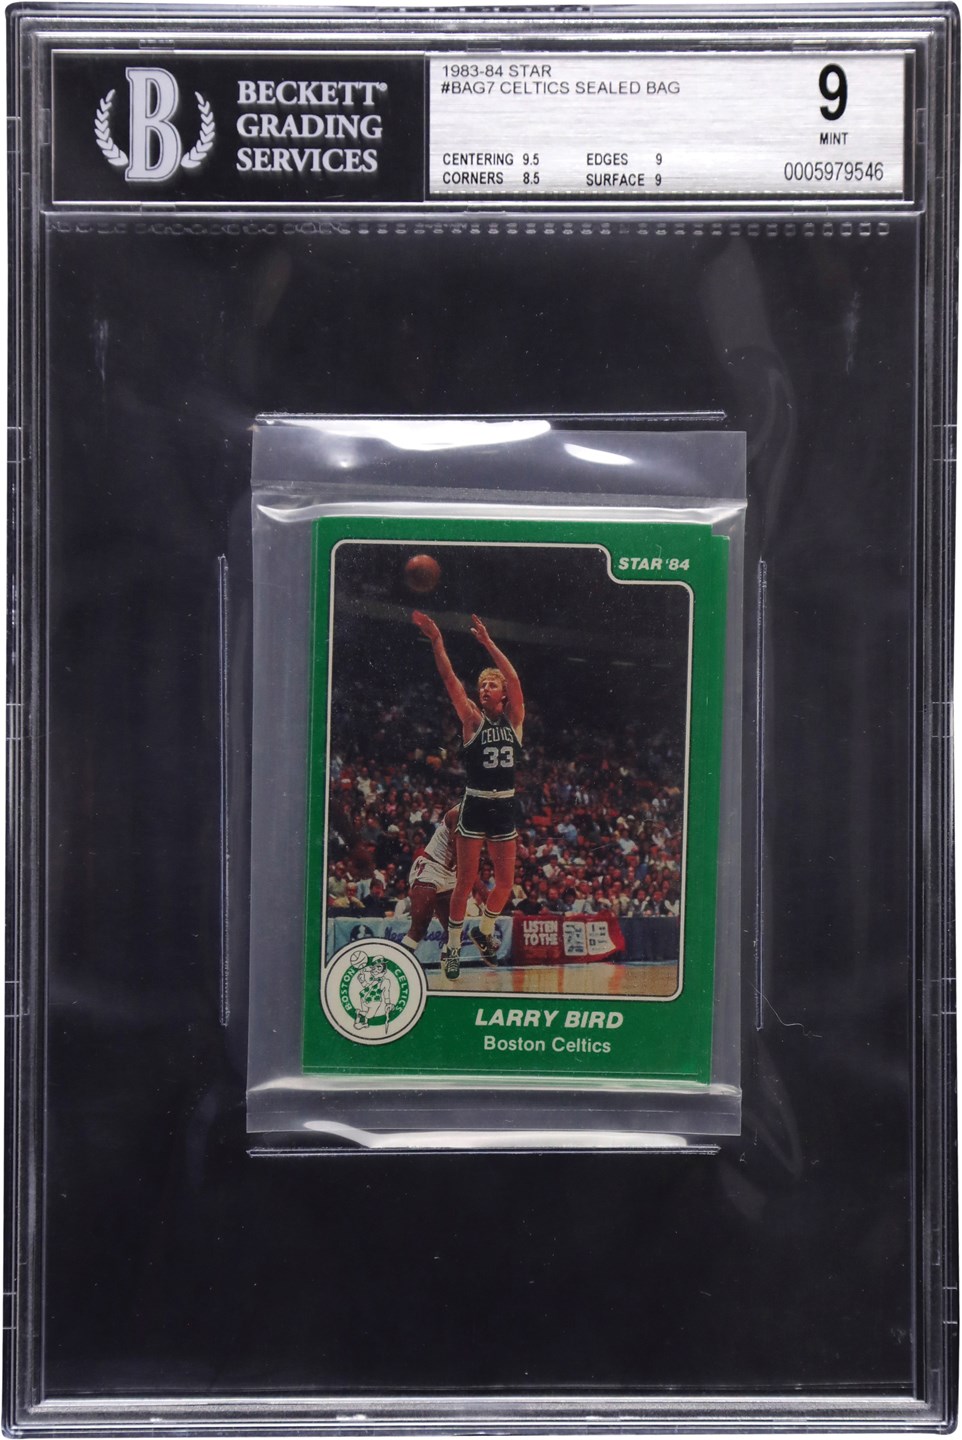 - Rare 1983-84 Star #BAG7 Boston Celtics Sealed Bag BGS MINT 9